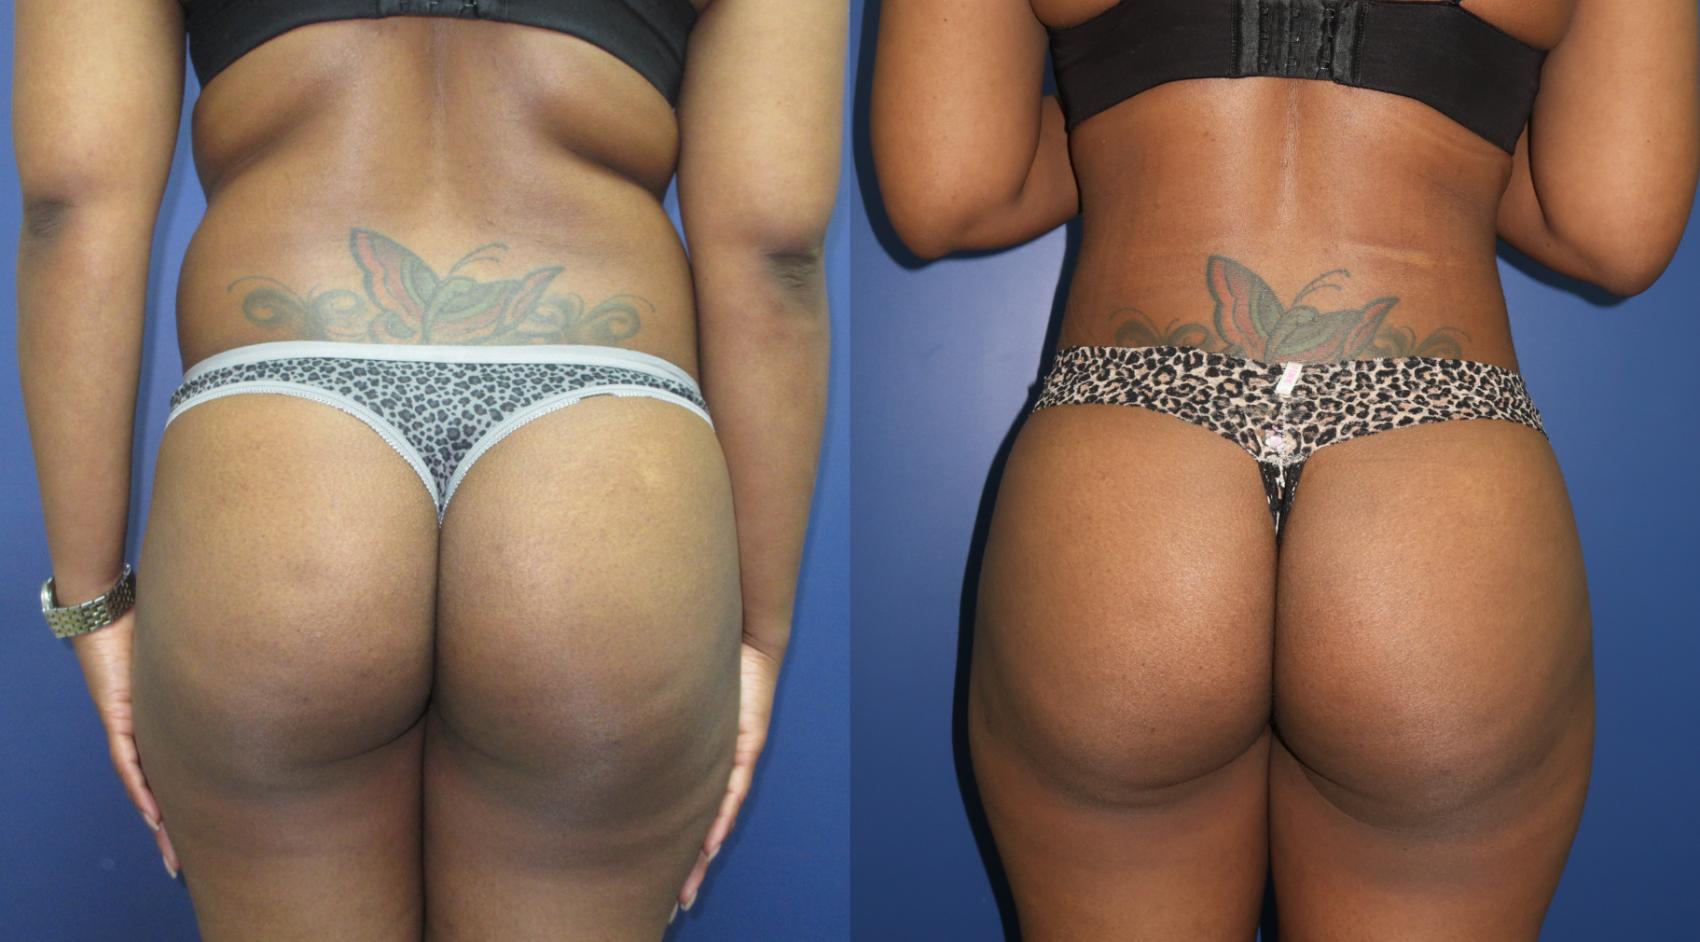 Brazilian Butt Lift Before & After Photo | Atlanta, GA | Plastic Surgery Center of the South